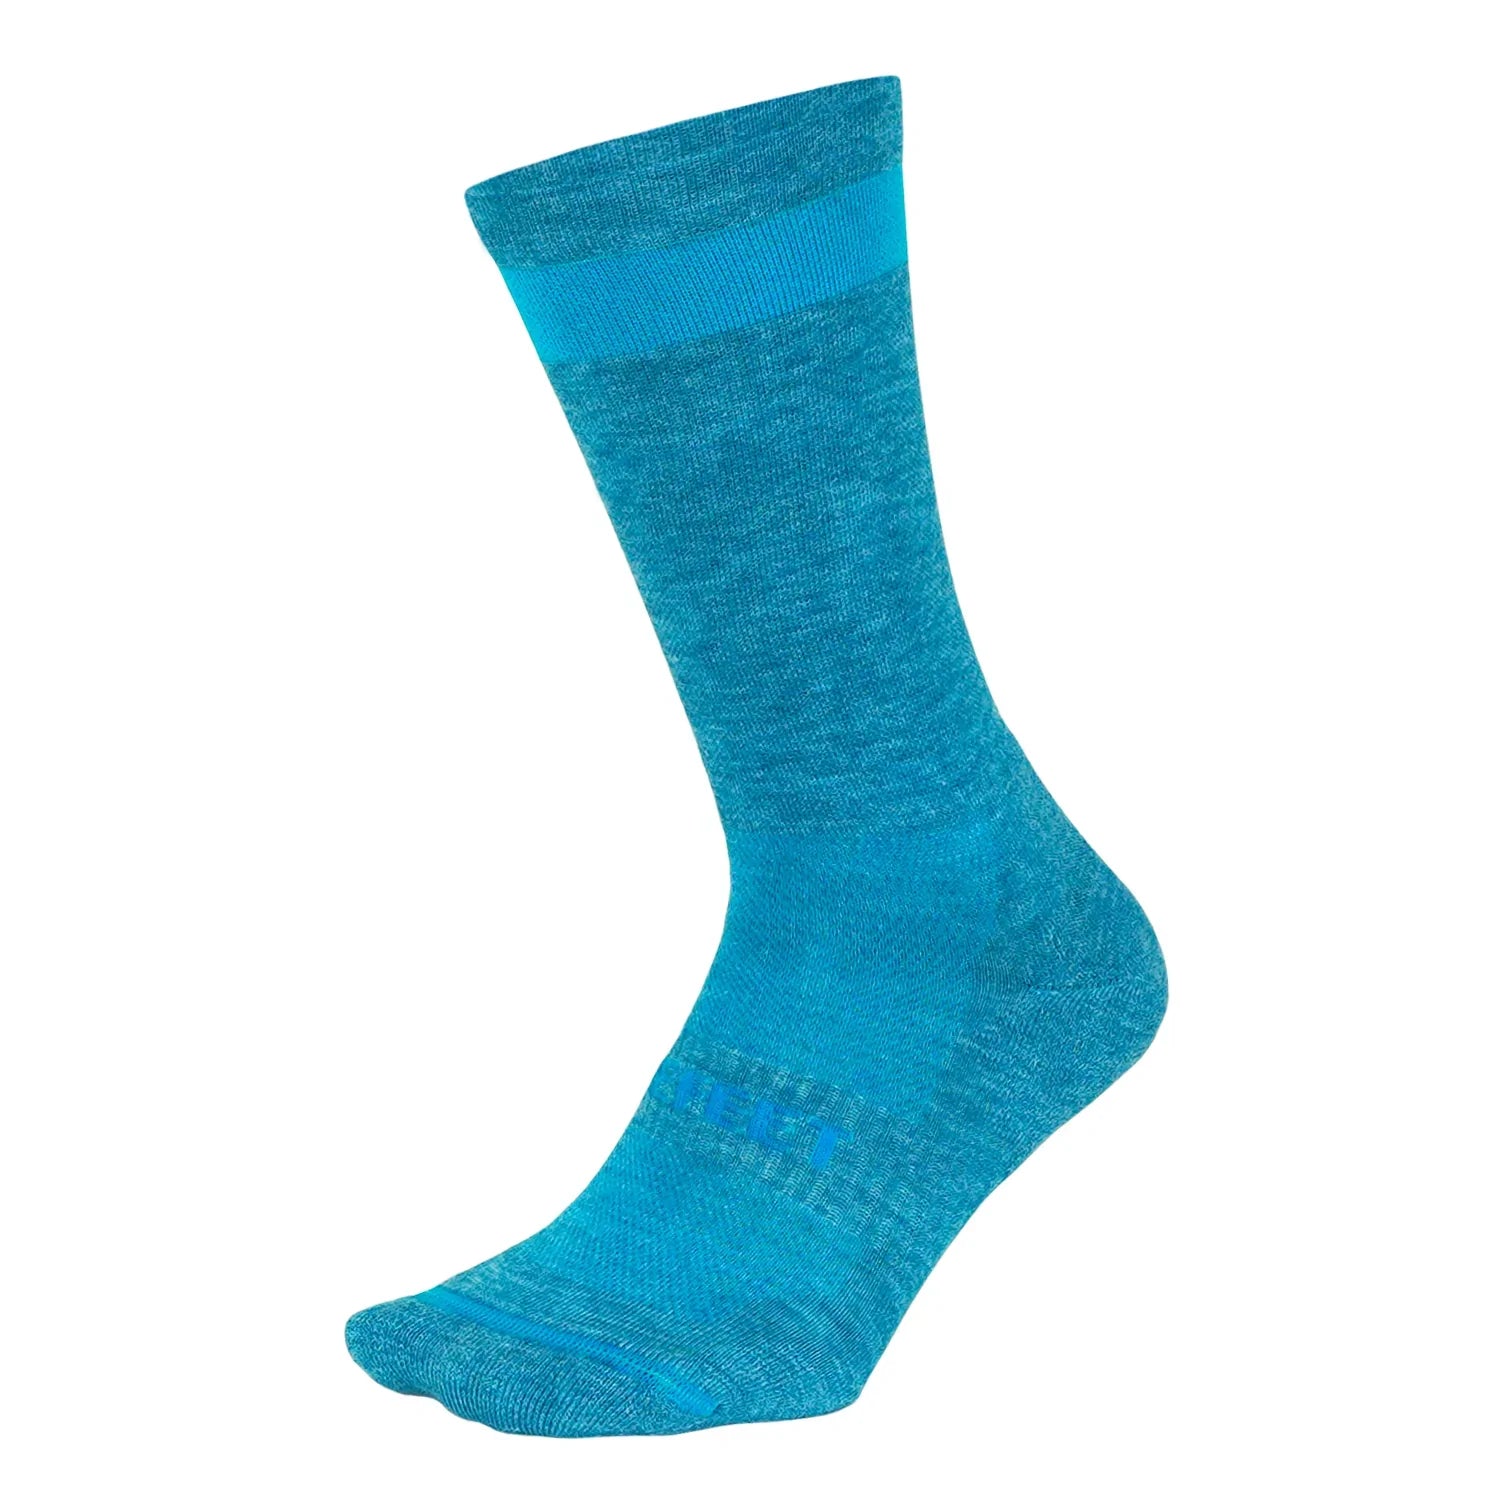 DeFeet Cush wool cycling sock in bright blue with a wide blue cuff stripe